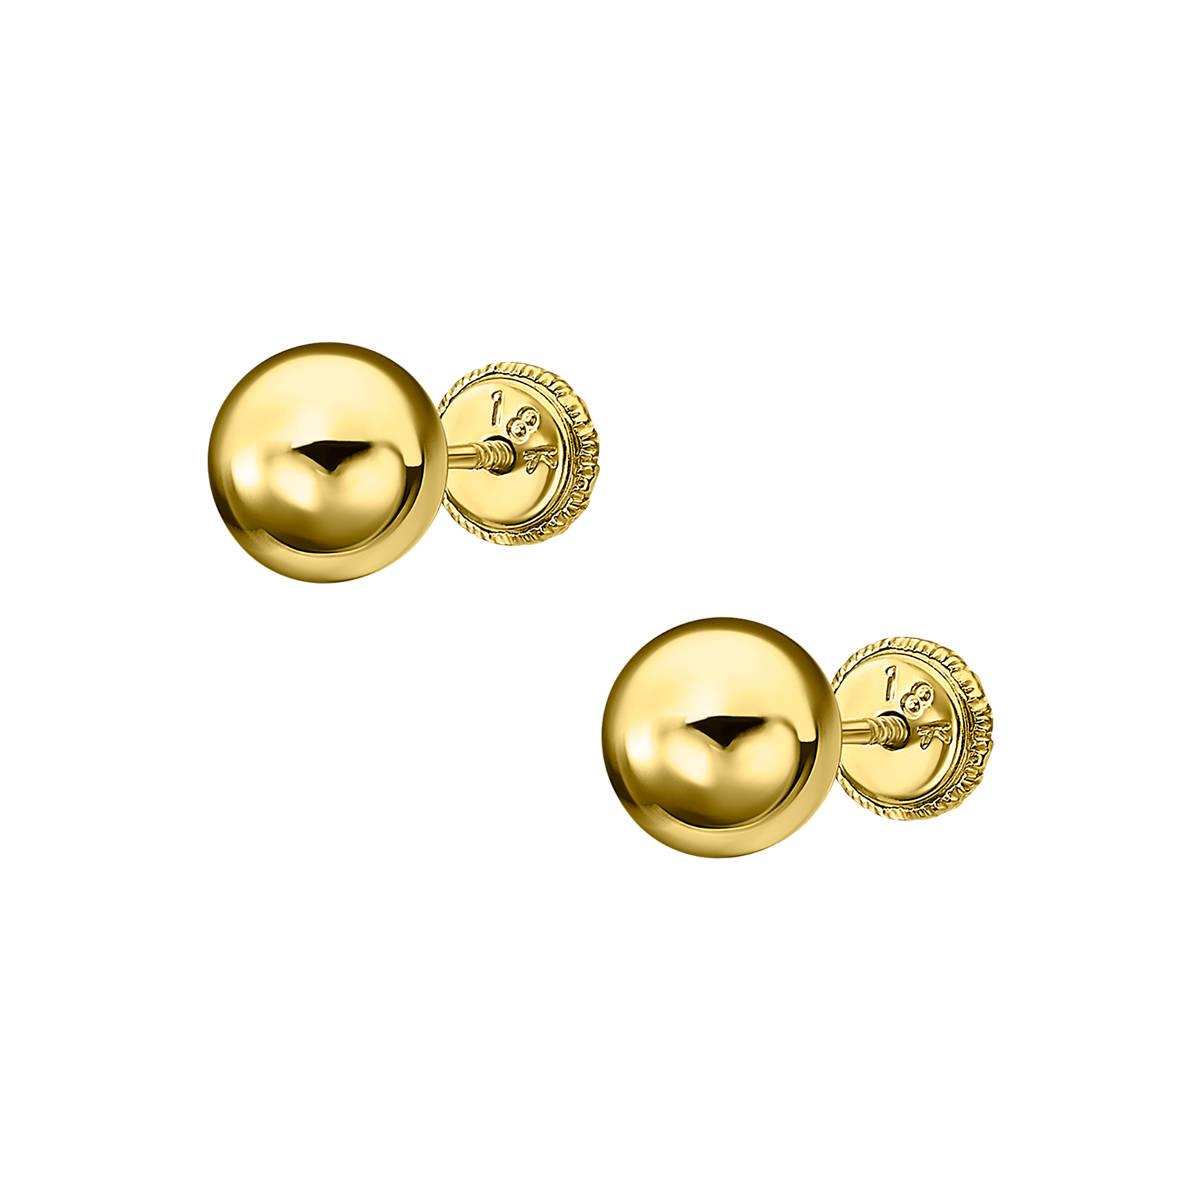 gold earrings LG001086